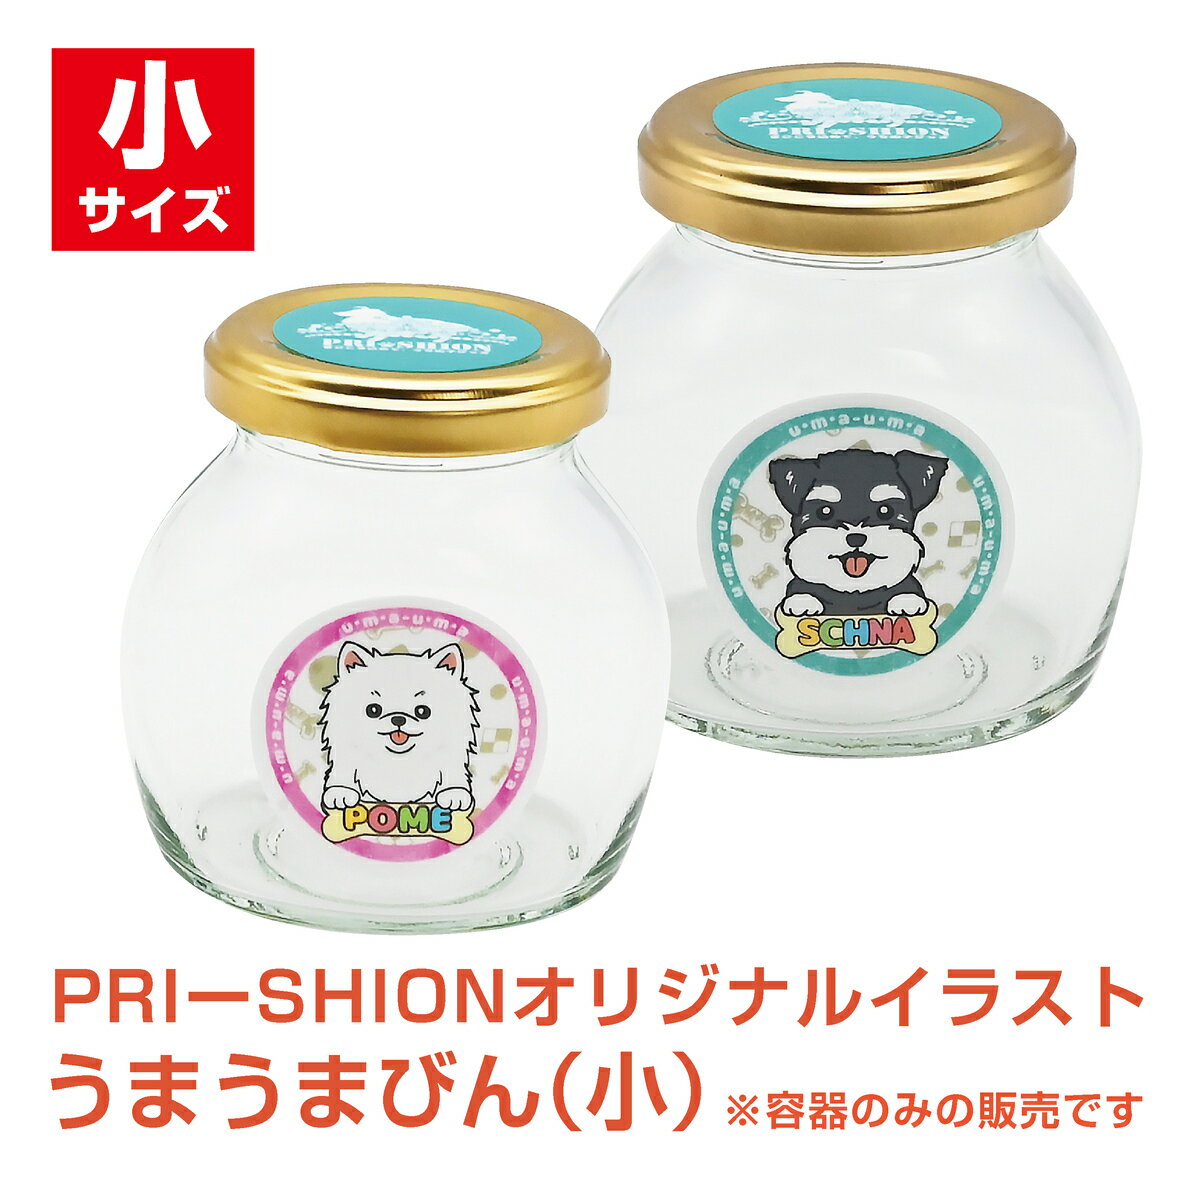 PRI-SHION オリジナル イ